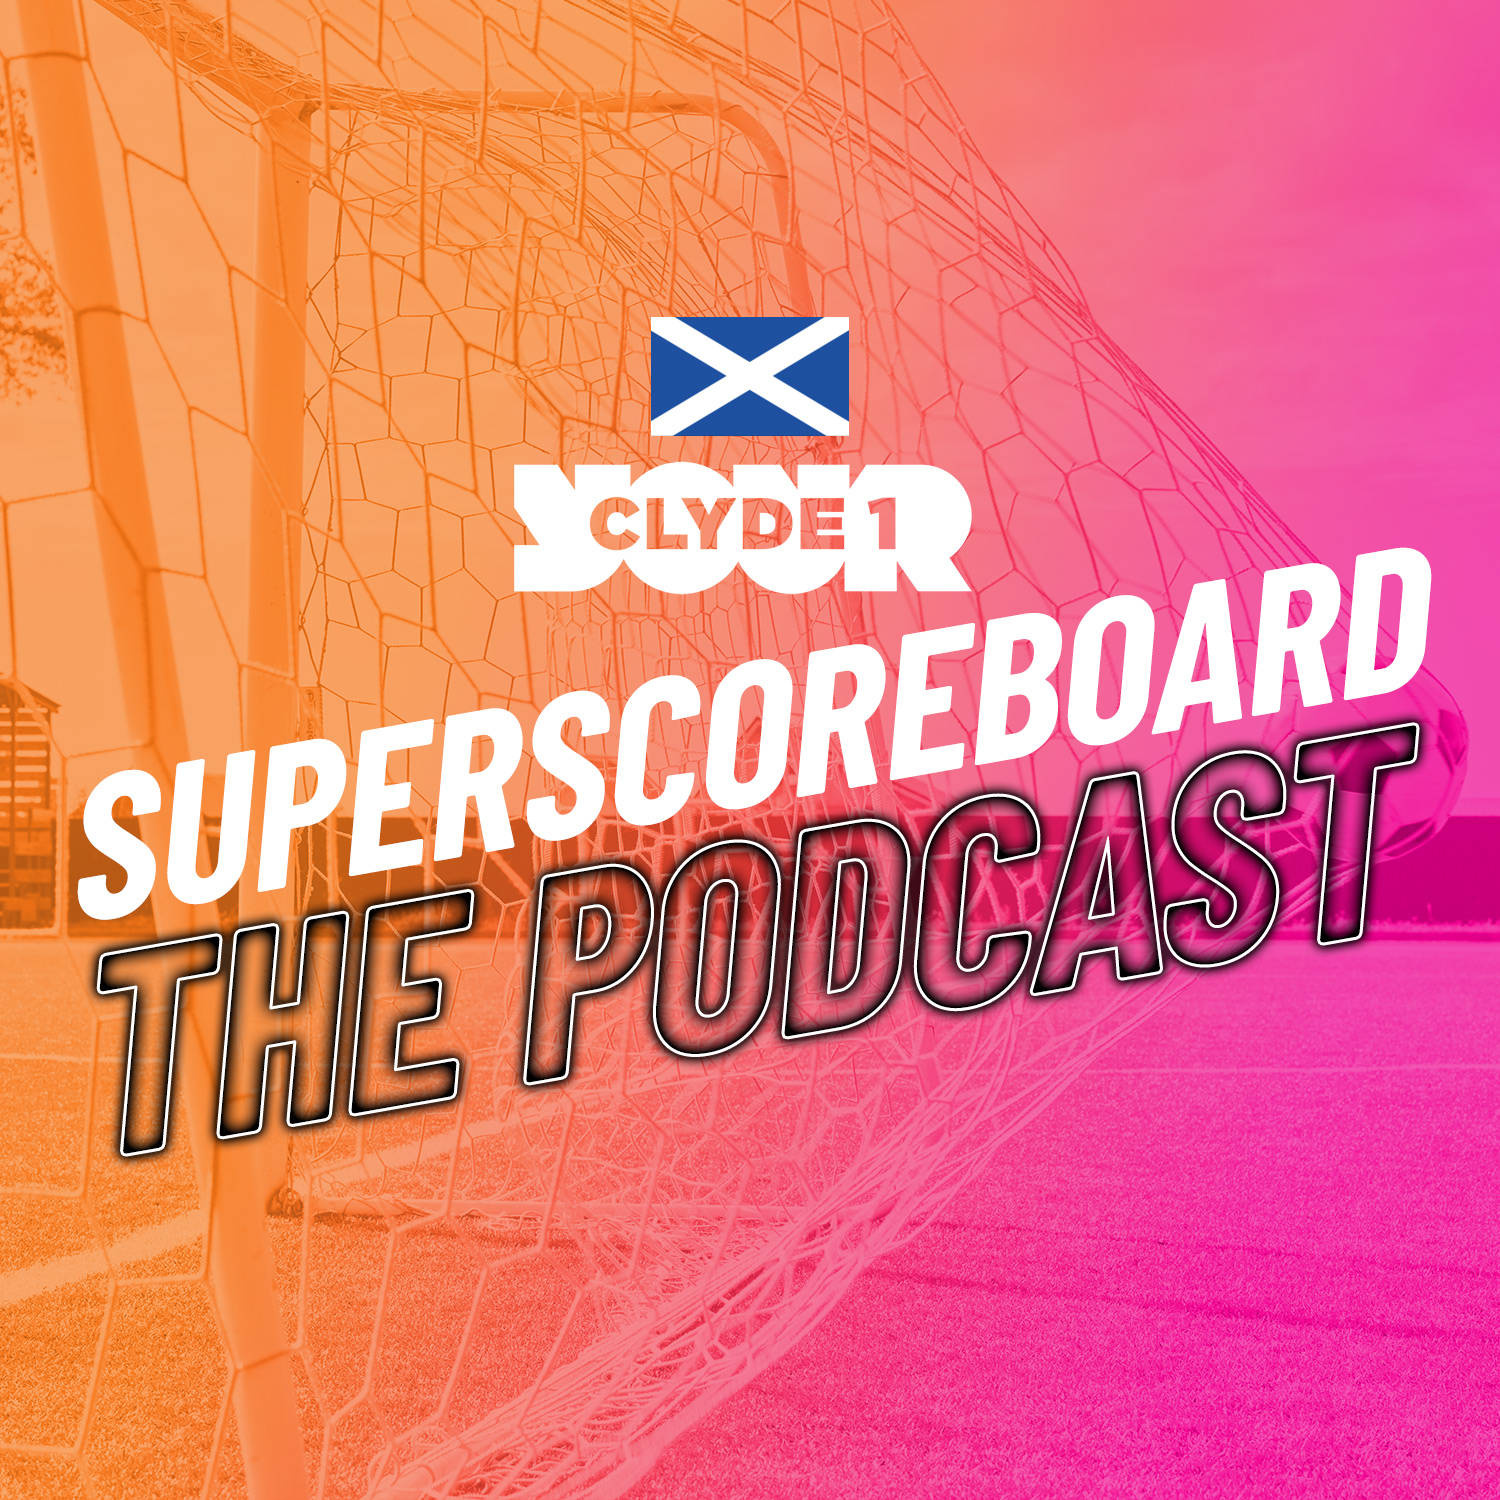 Monday 22nd January Clyde 1 Superscoreboard